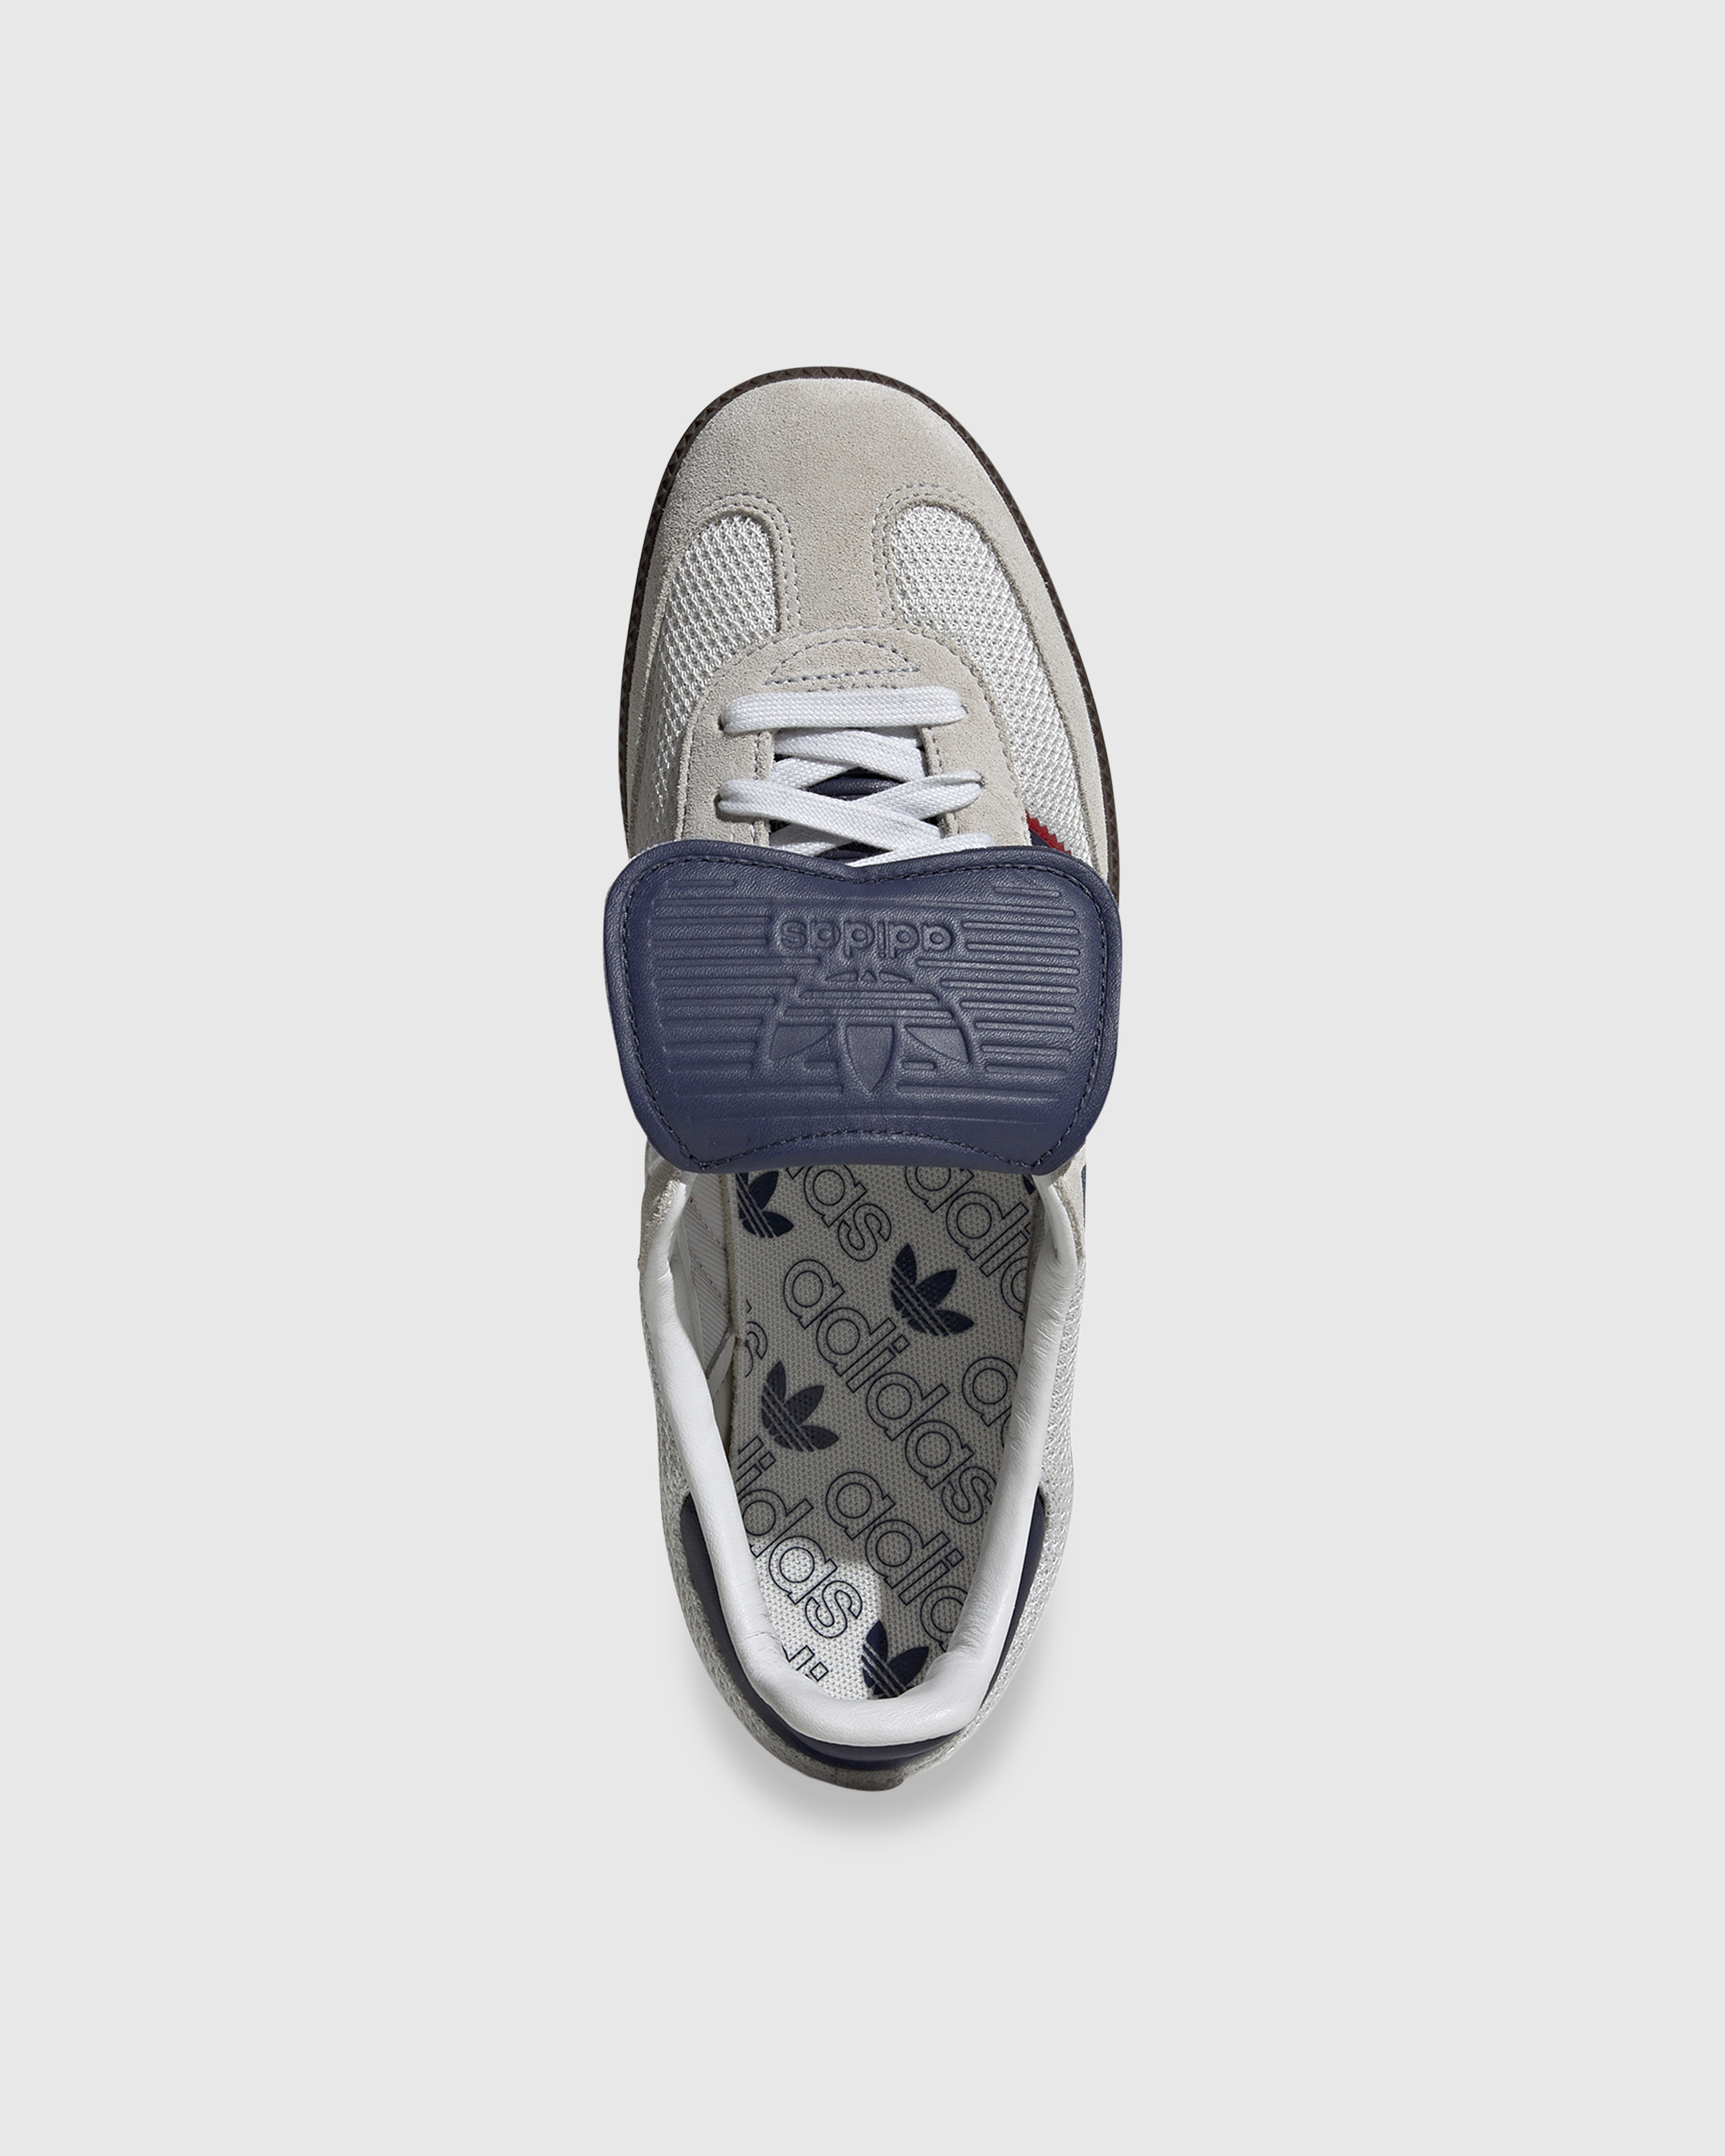 Adidas – Samba LT White/Blue/Gum - Low Top Sneakers - White - Image 5